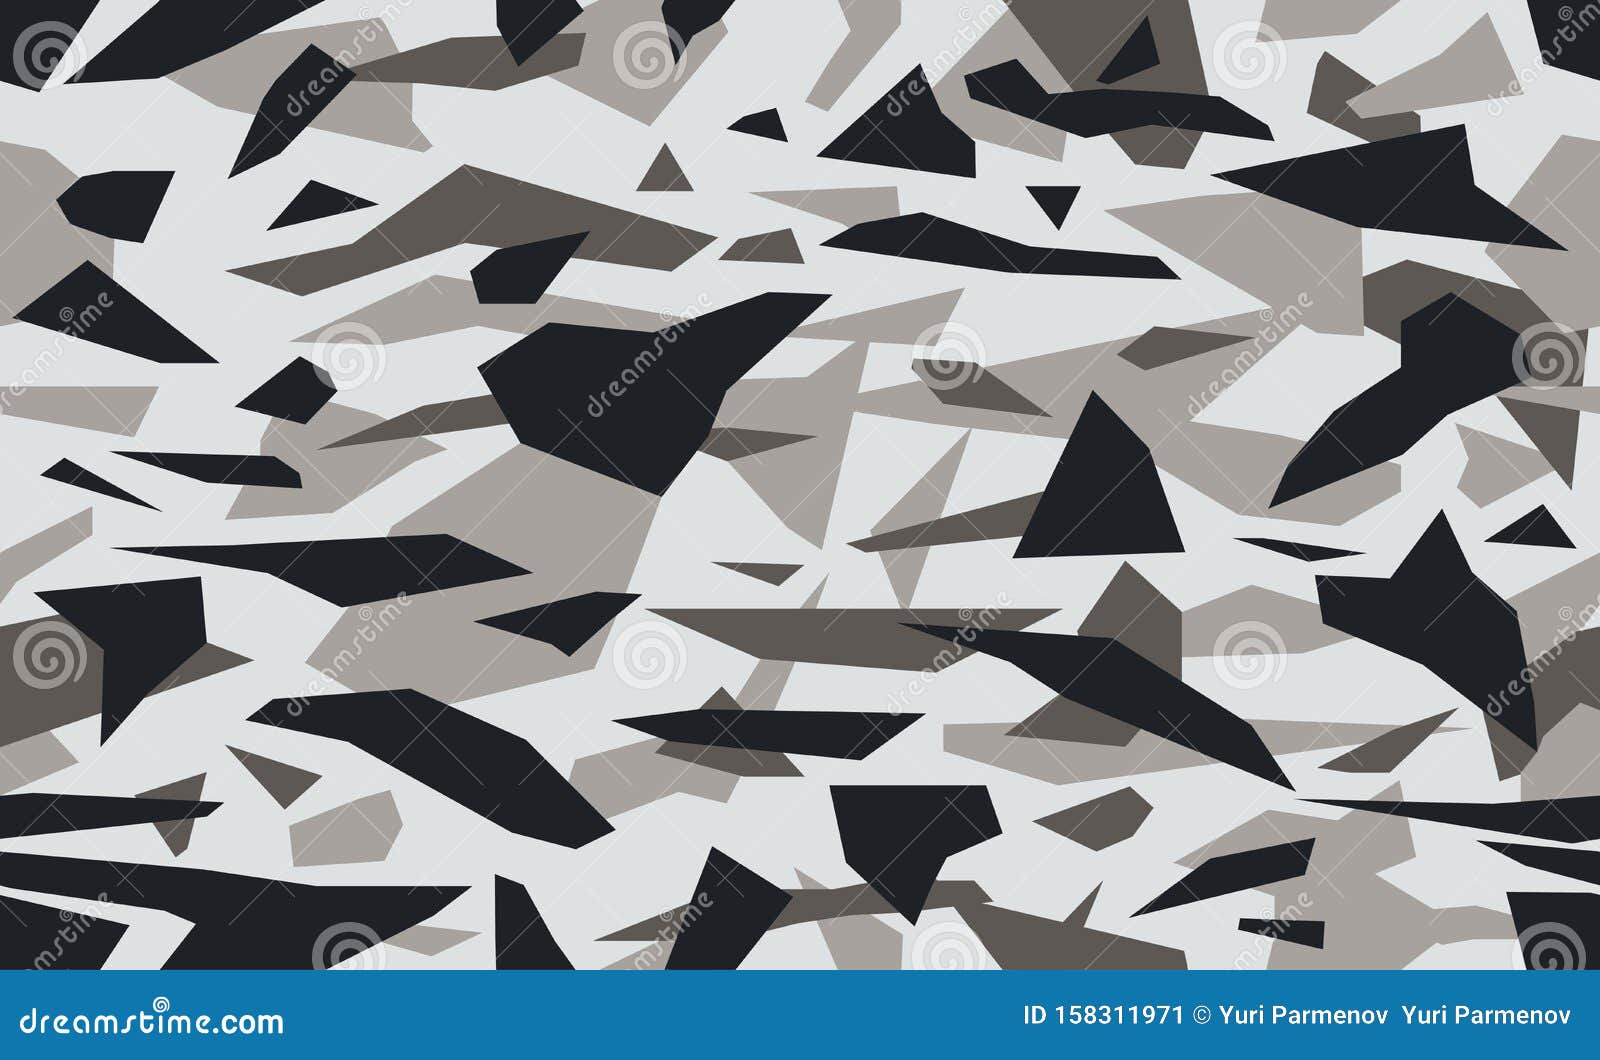 triangular camouflage pattern background, seamless  . masking geometric camo, repeat print. grey black and white